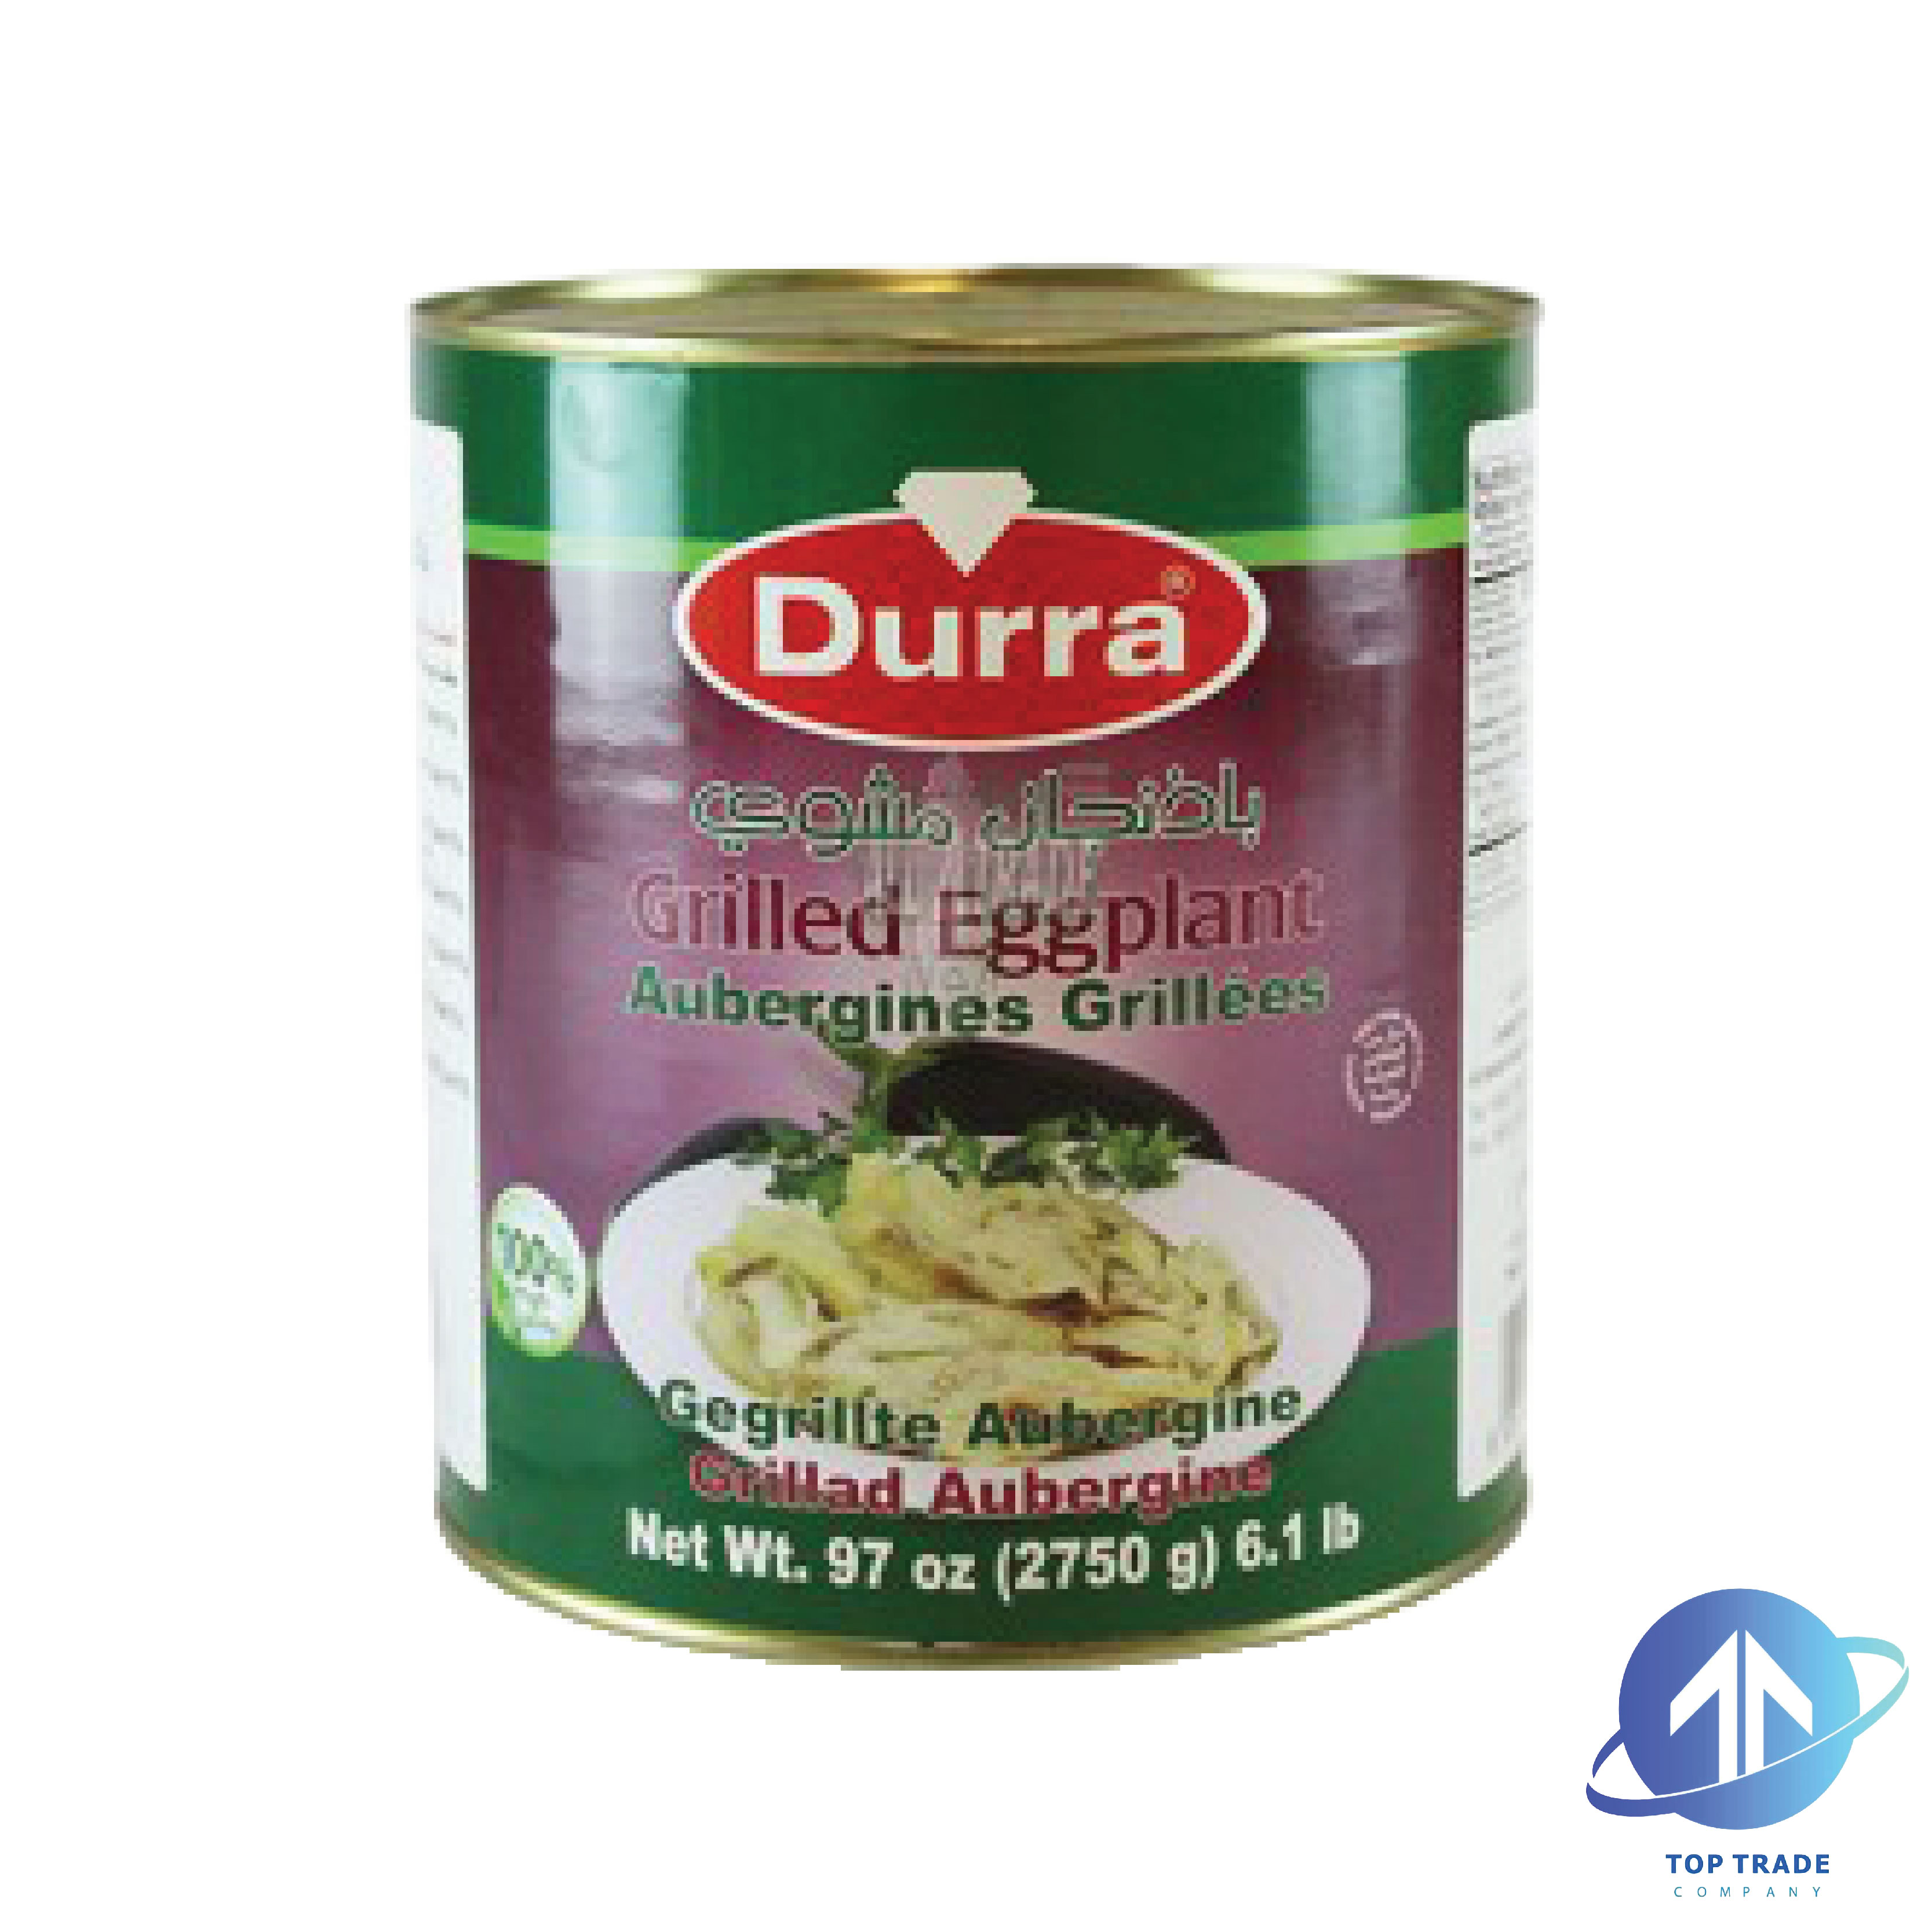 Durra Grilled Eggplant 2750gr 